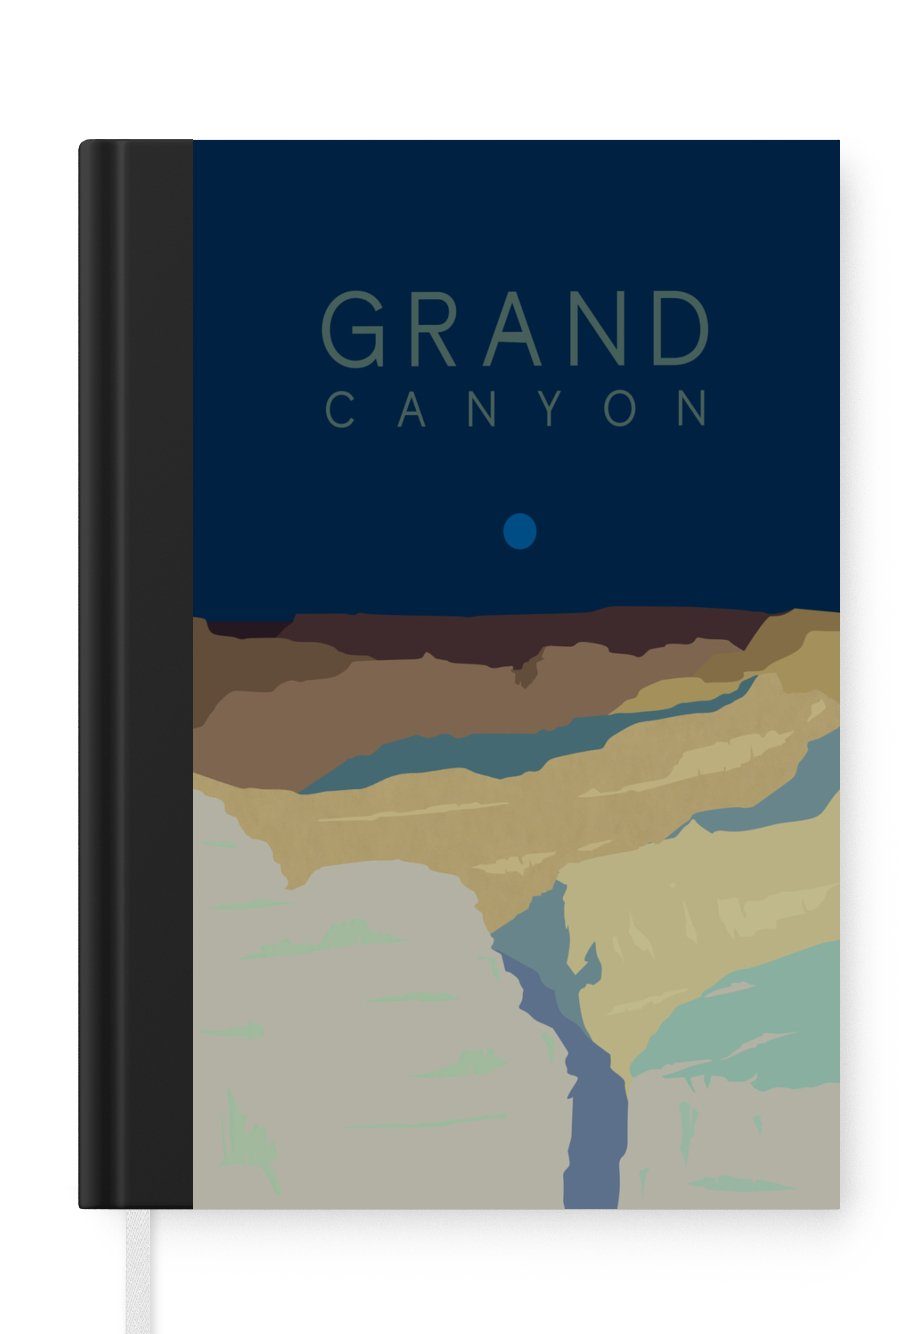 MuchoWow Notizbuch Arizona - Grand Canyon - USA - Illustration, Journal, Merkzettel, Tagebuch, Notizheft, A5, 98 Seiten, Haushaltsbuch